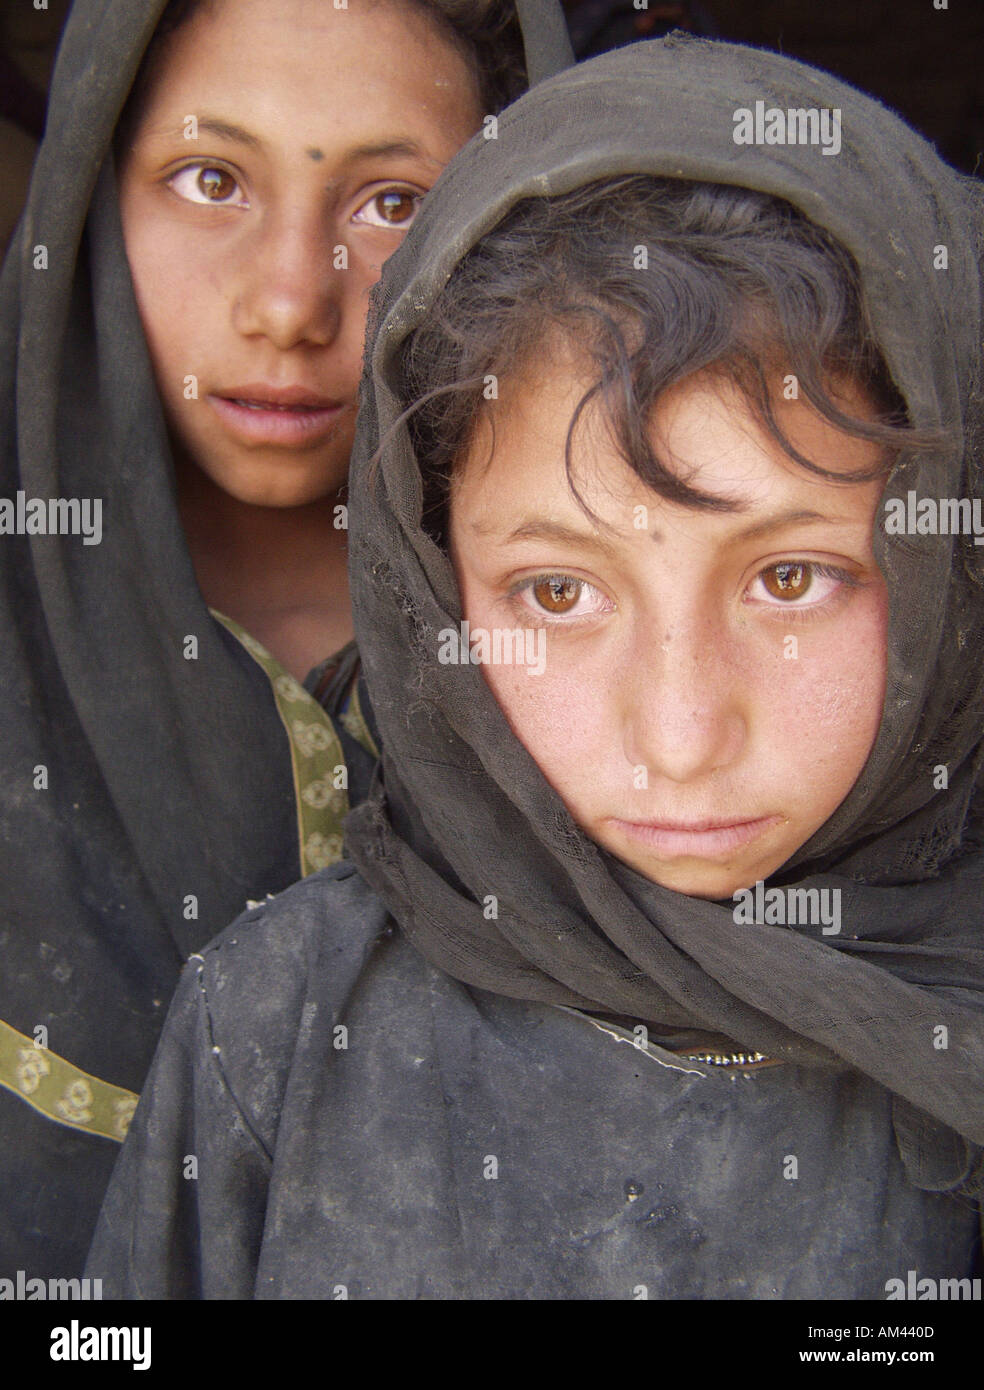 Afghanistan Children Stock Photo